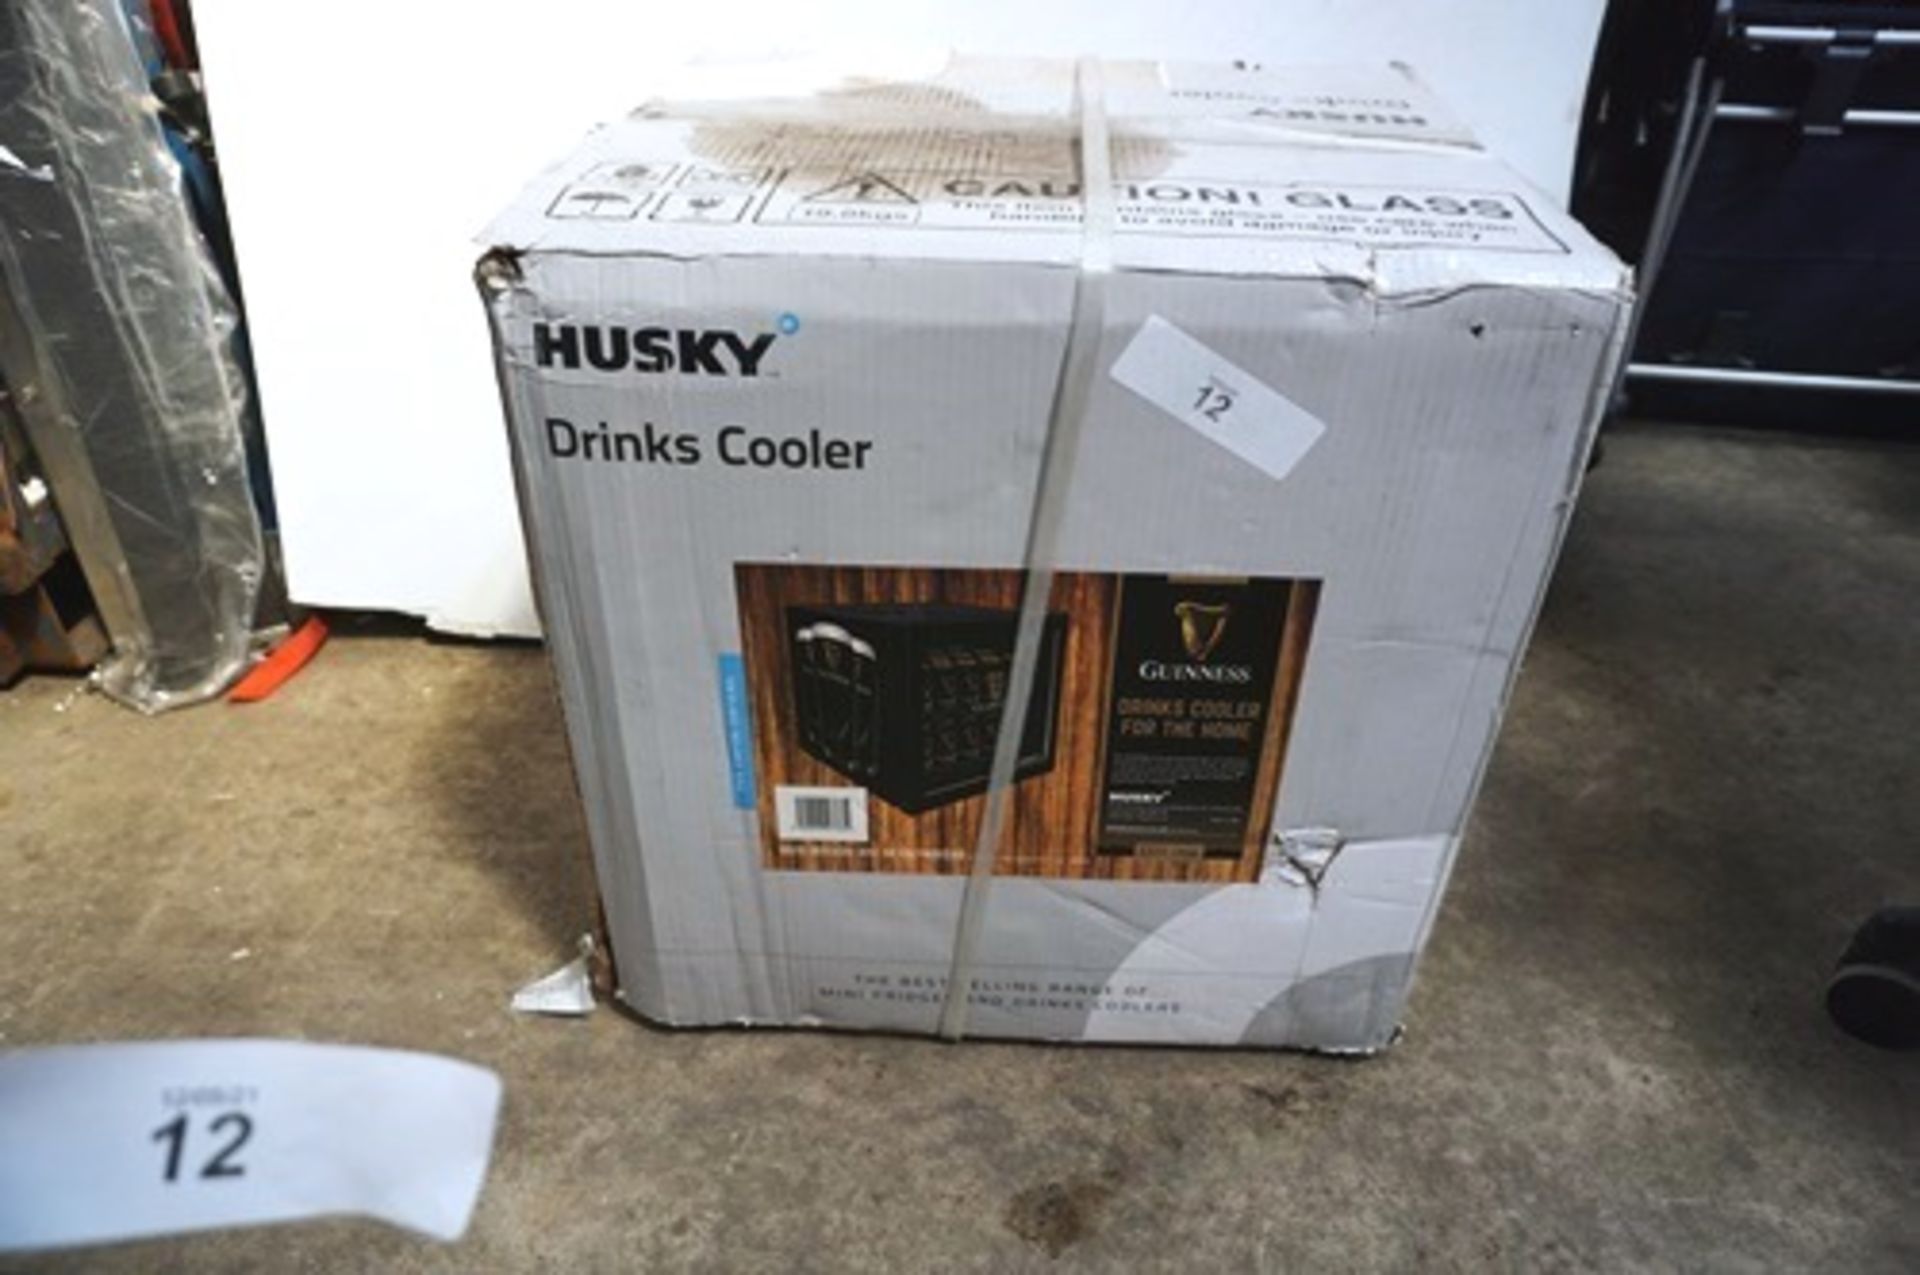 1 x Husky Guinness branded drinks fridge, model HUS-HY205-HU-M - Sealed new in box, box tatty (